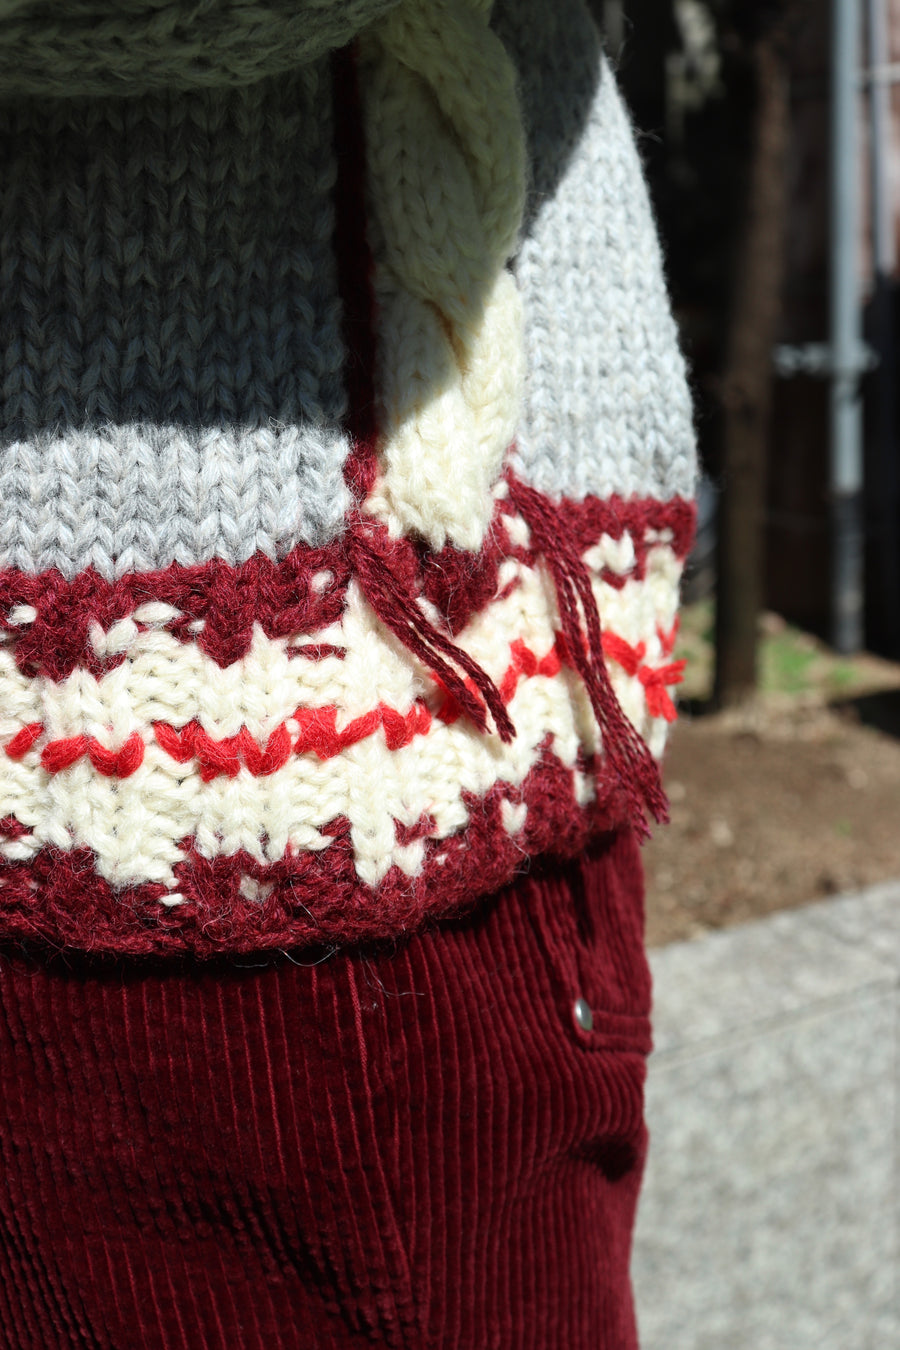 fluss  hand knit track jacket(GRAY MIX)